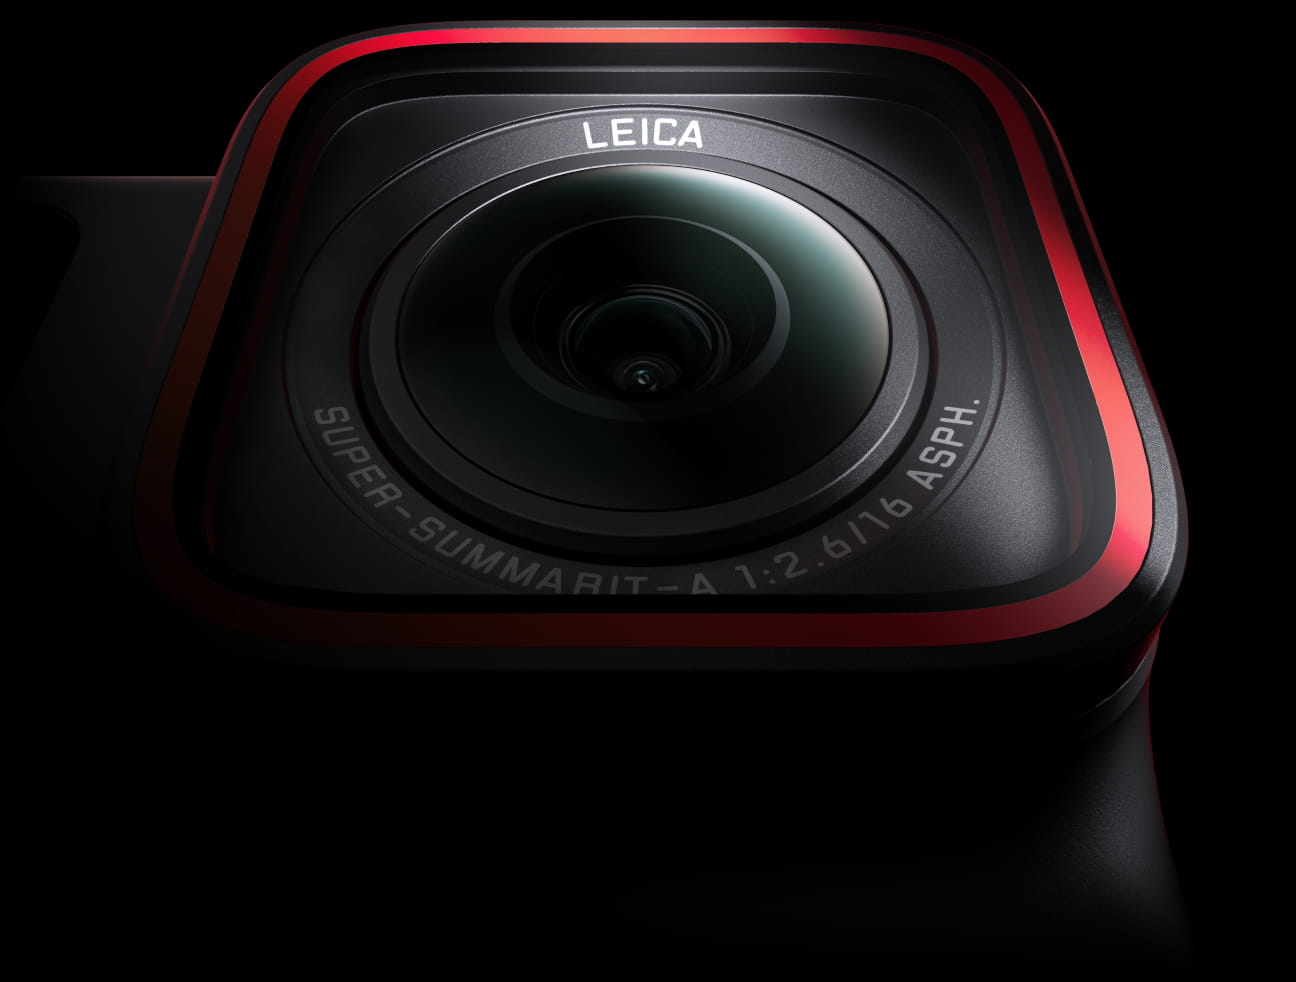 Insta360 Ace Pro Leica sensor. Photo: Insta360